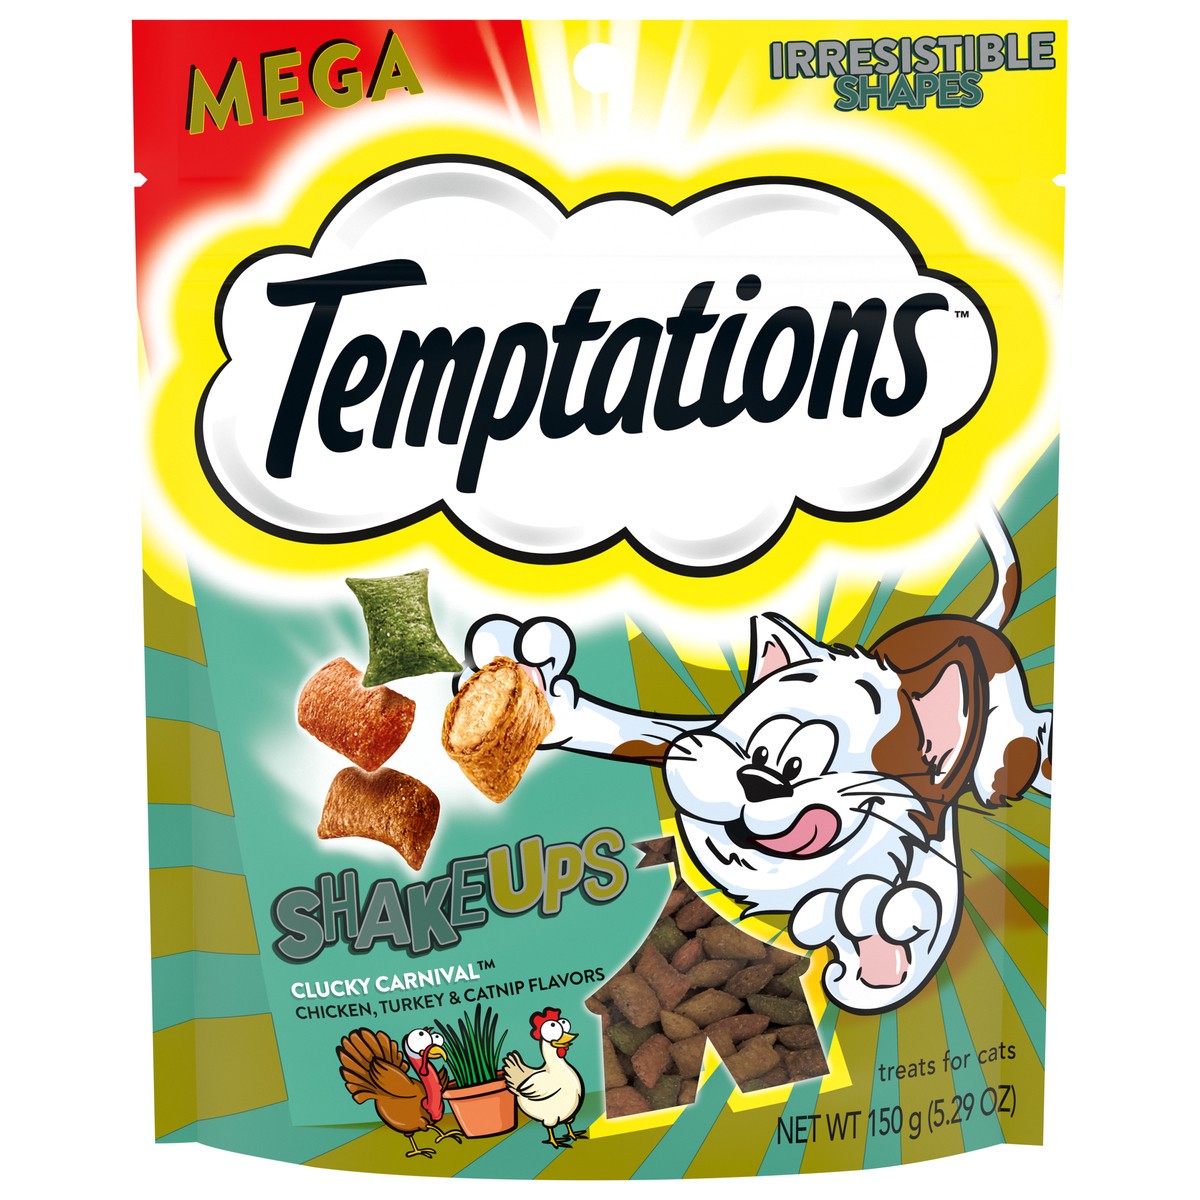 slide 1 of 3, Temptations ShakeUps Mega Clucky Carnival Treats for Cats Mega 5.29 oz, 5.29 oz